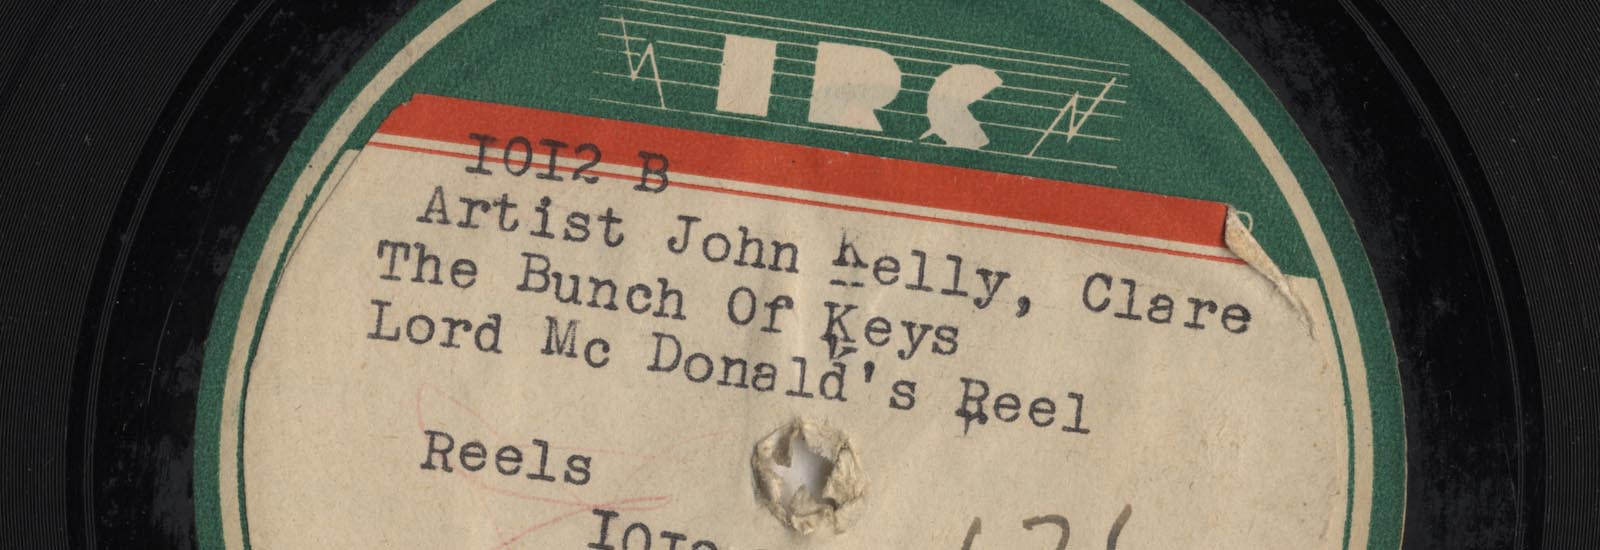 John Kelly: Irish Recording Company 78rpm Disc